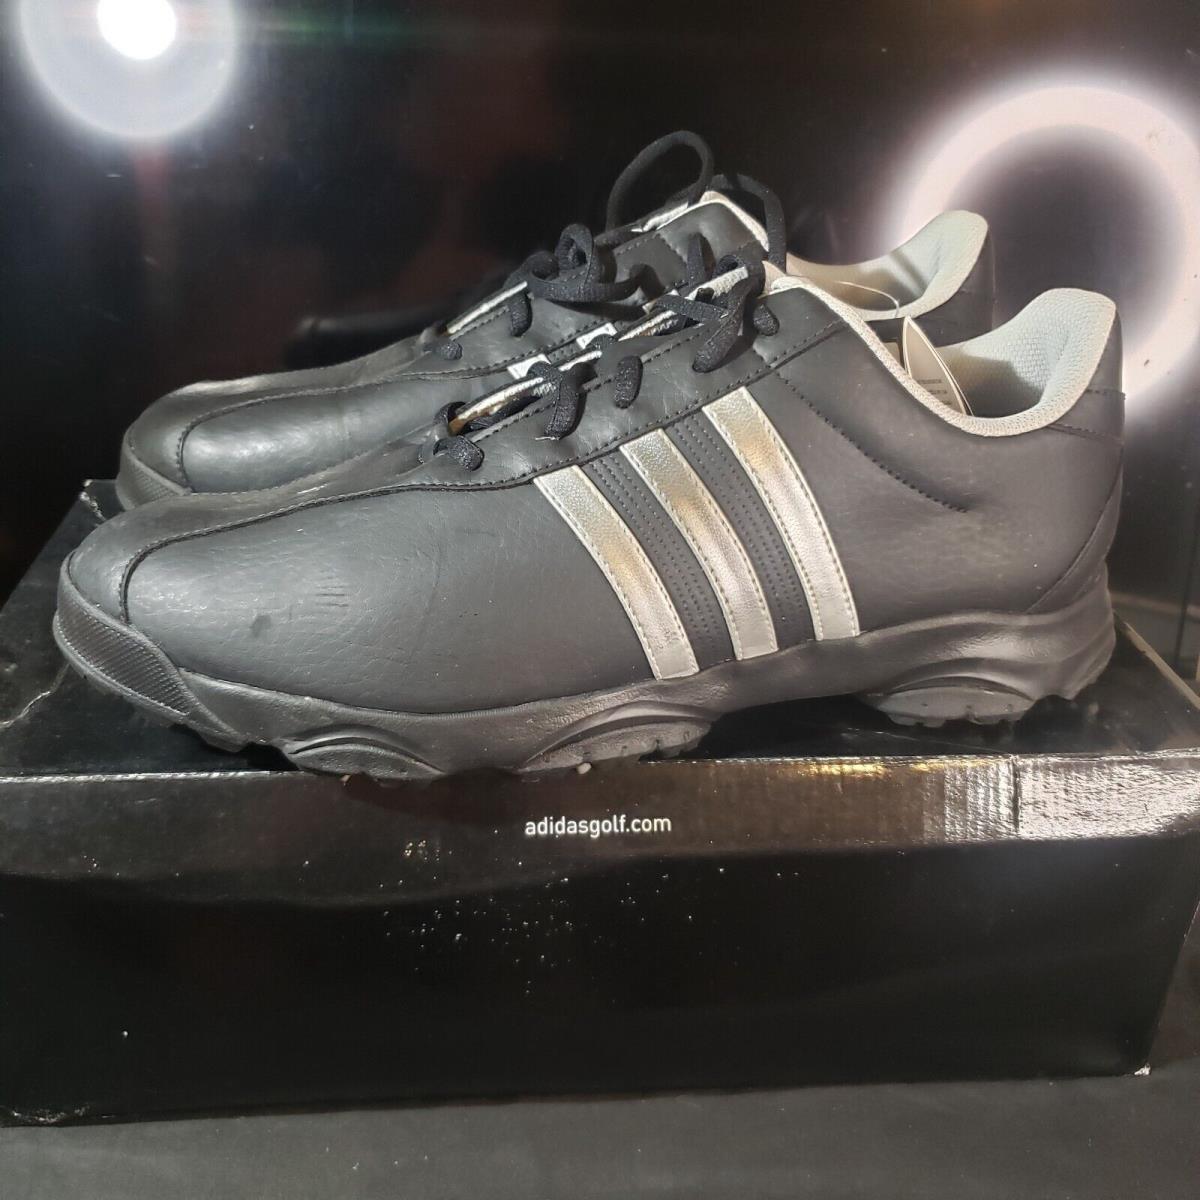 Adidas Shoes Mens 11 Golflite Slamwd Dks Athletic Golf Sneakers 816114 Black